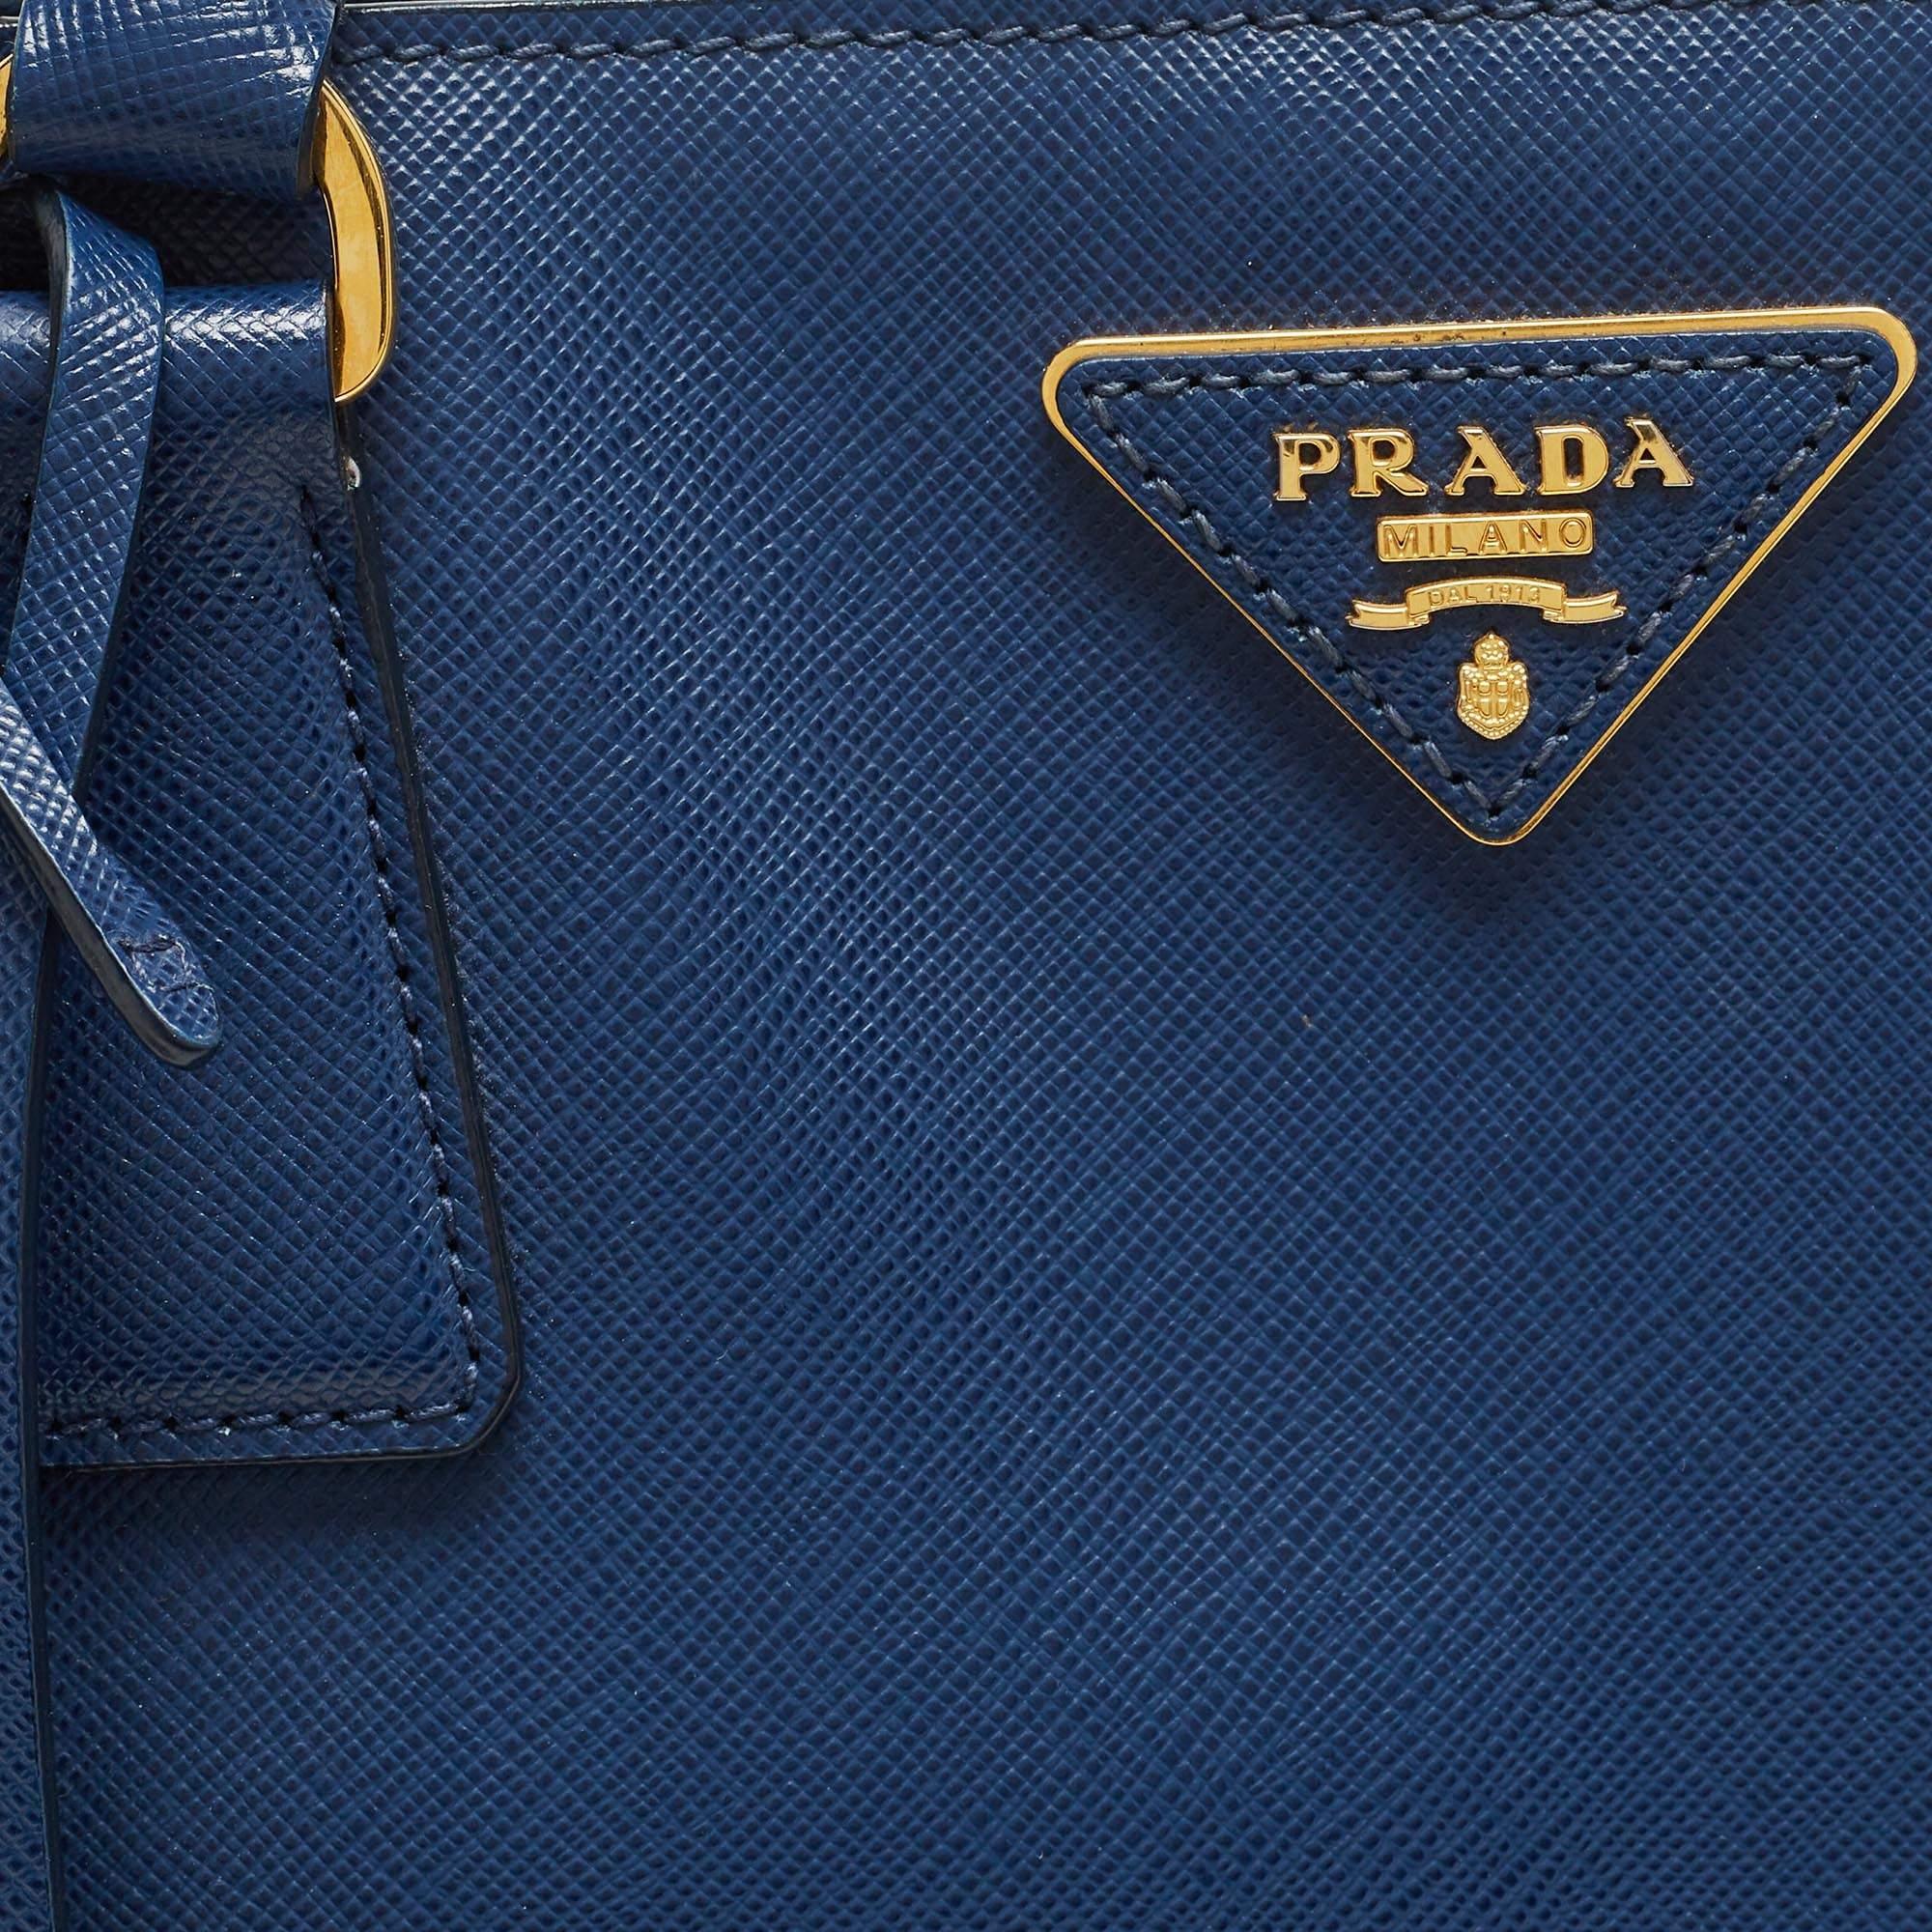  Prada - Grand sac à main en cuir Saffiano bleu pour jardiniers Pour femmes 